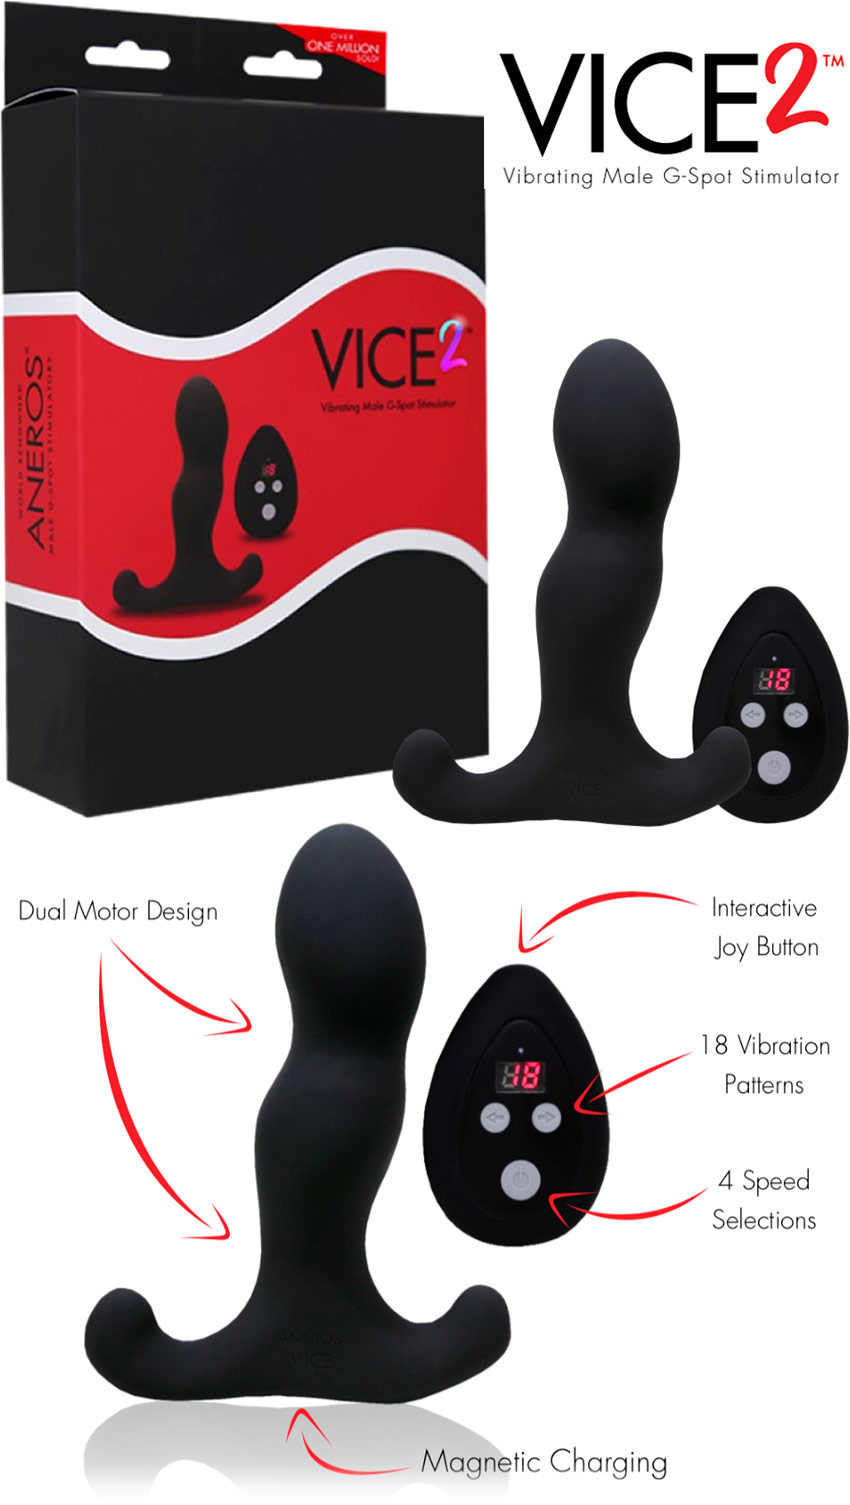 Aneros Vice 2 prostate vibrator